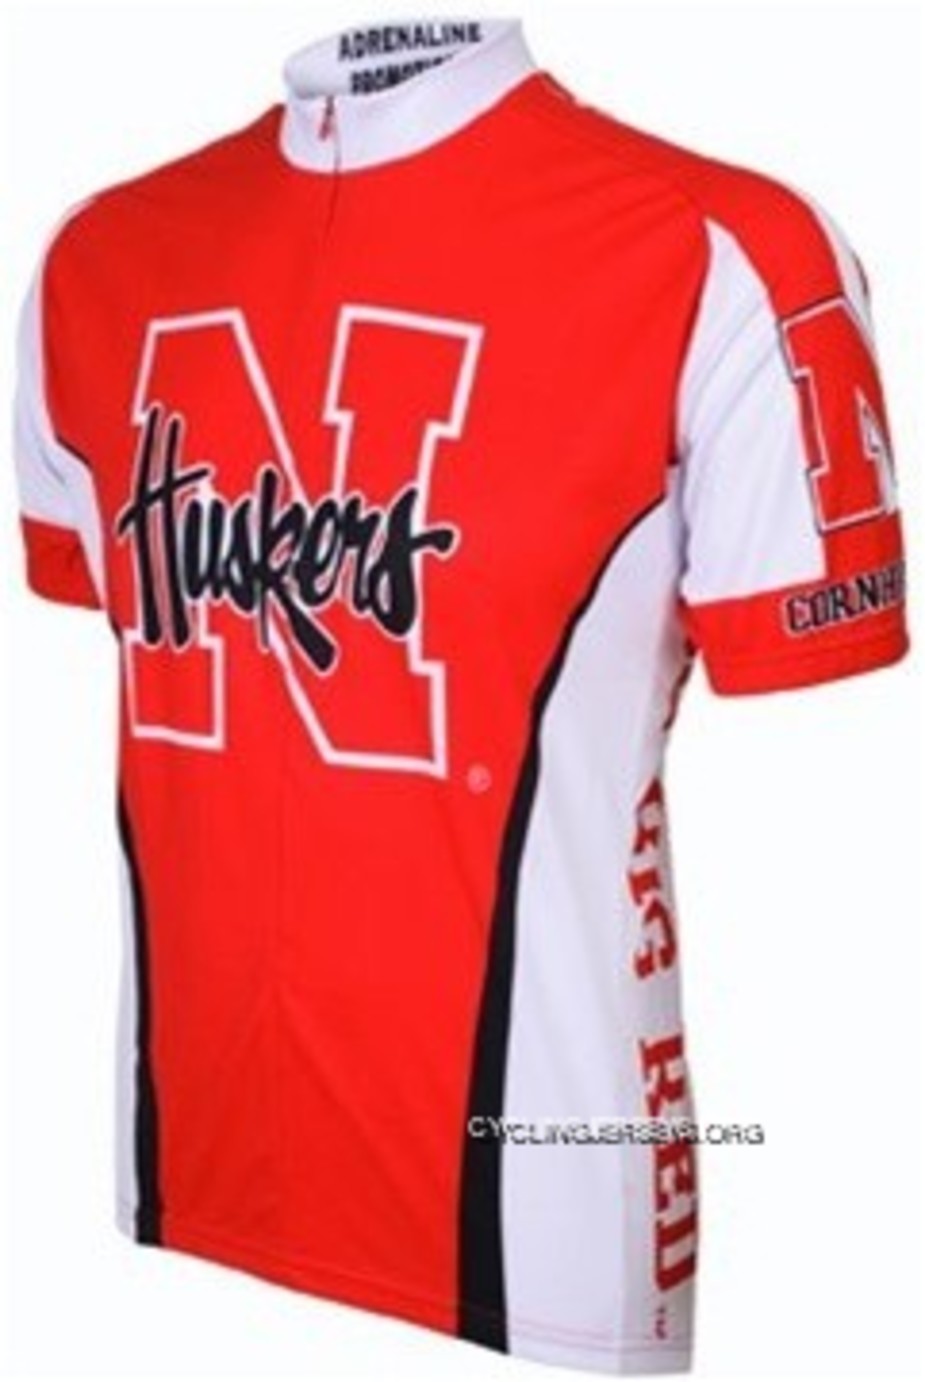 University Of Nebraska Cornhuskers Cycling Short Sleeve Jersey Top Deals